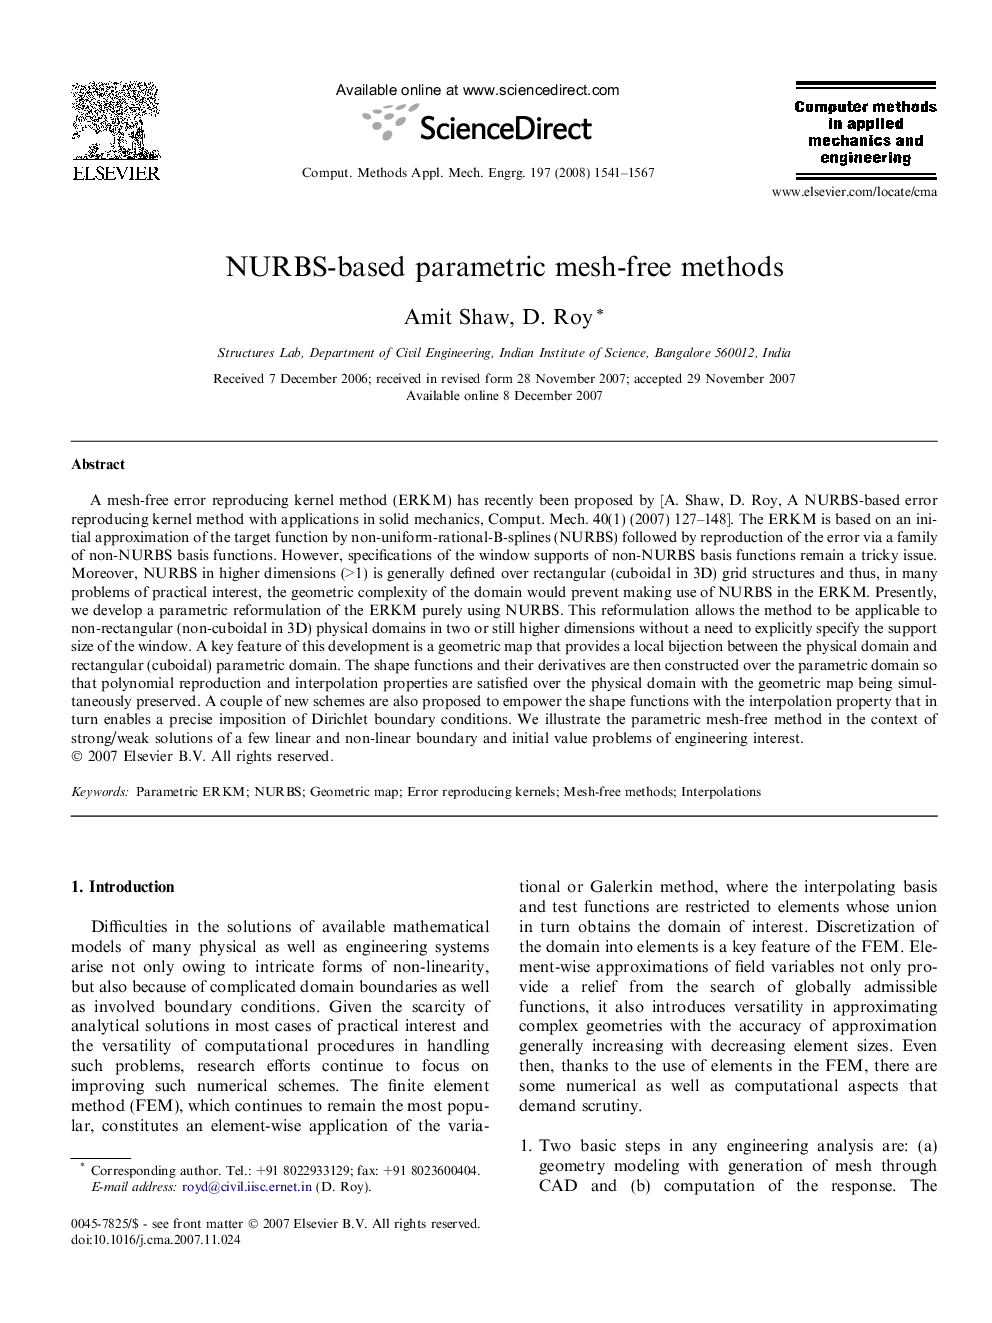 NURBS-based parametric mesh-free methods